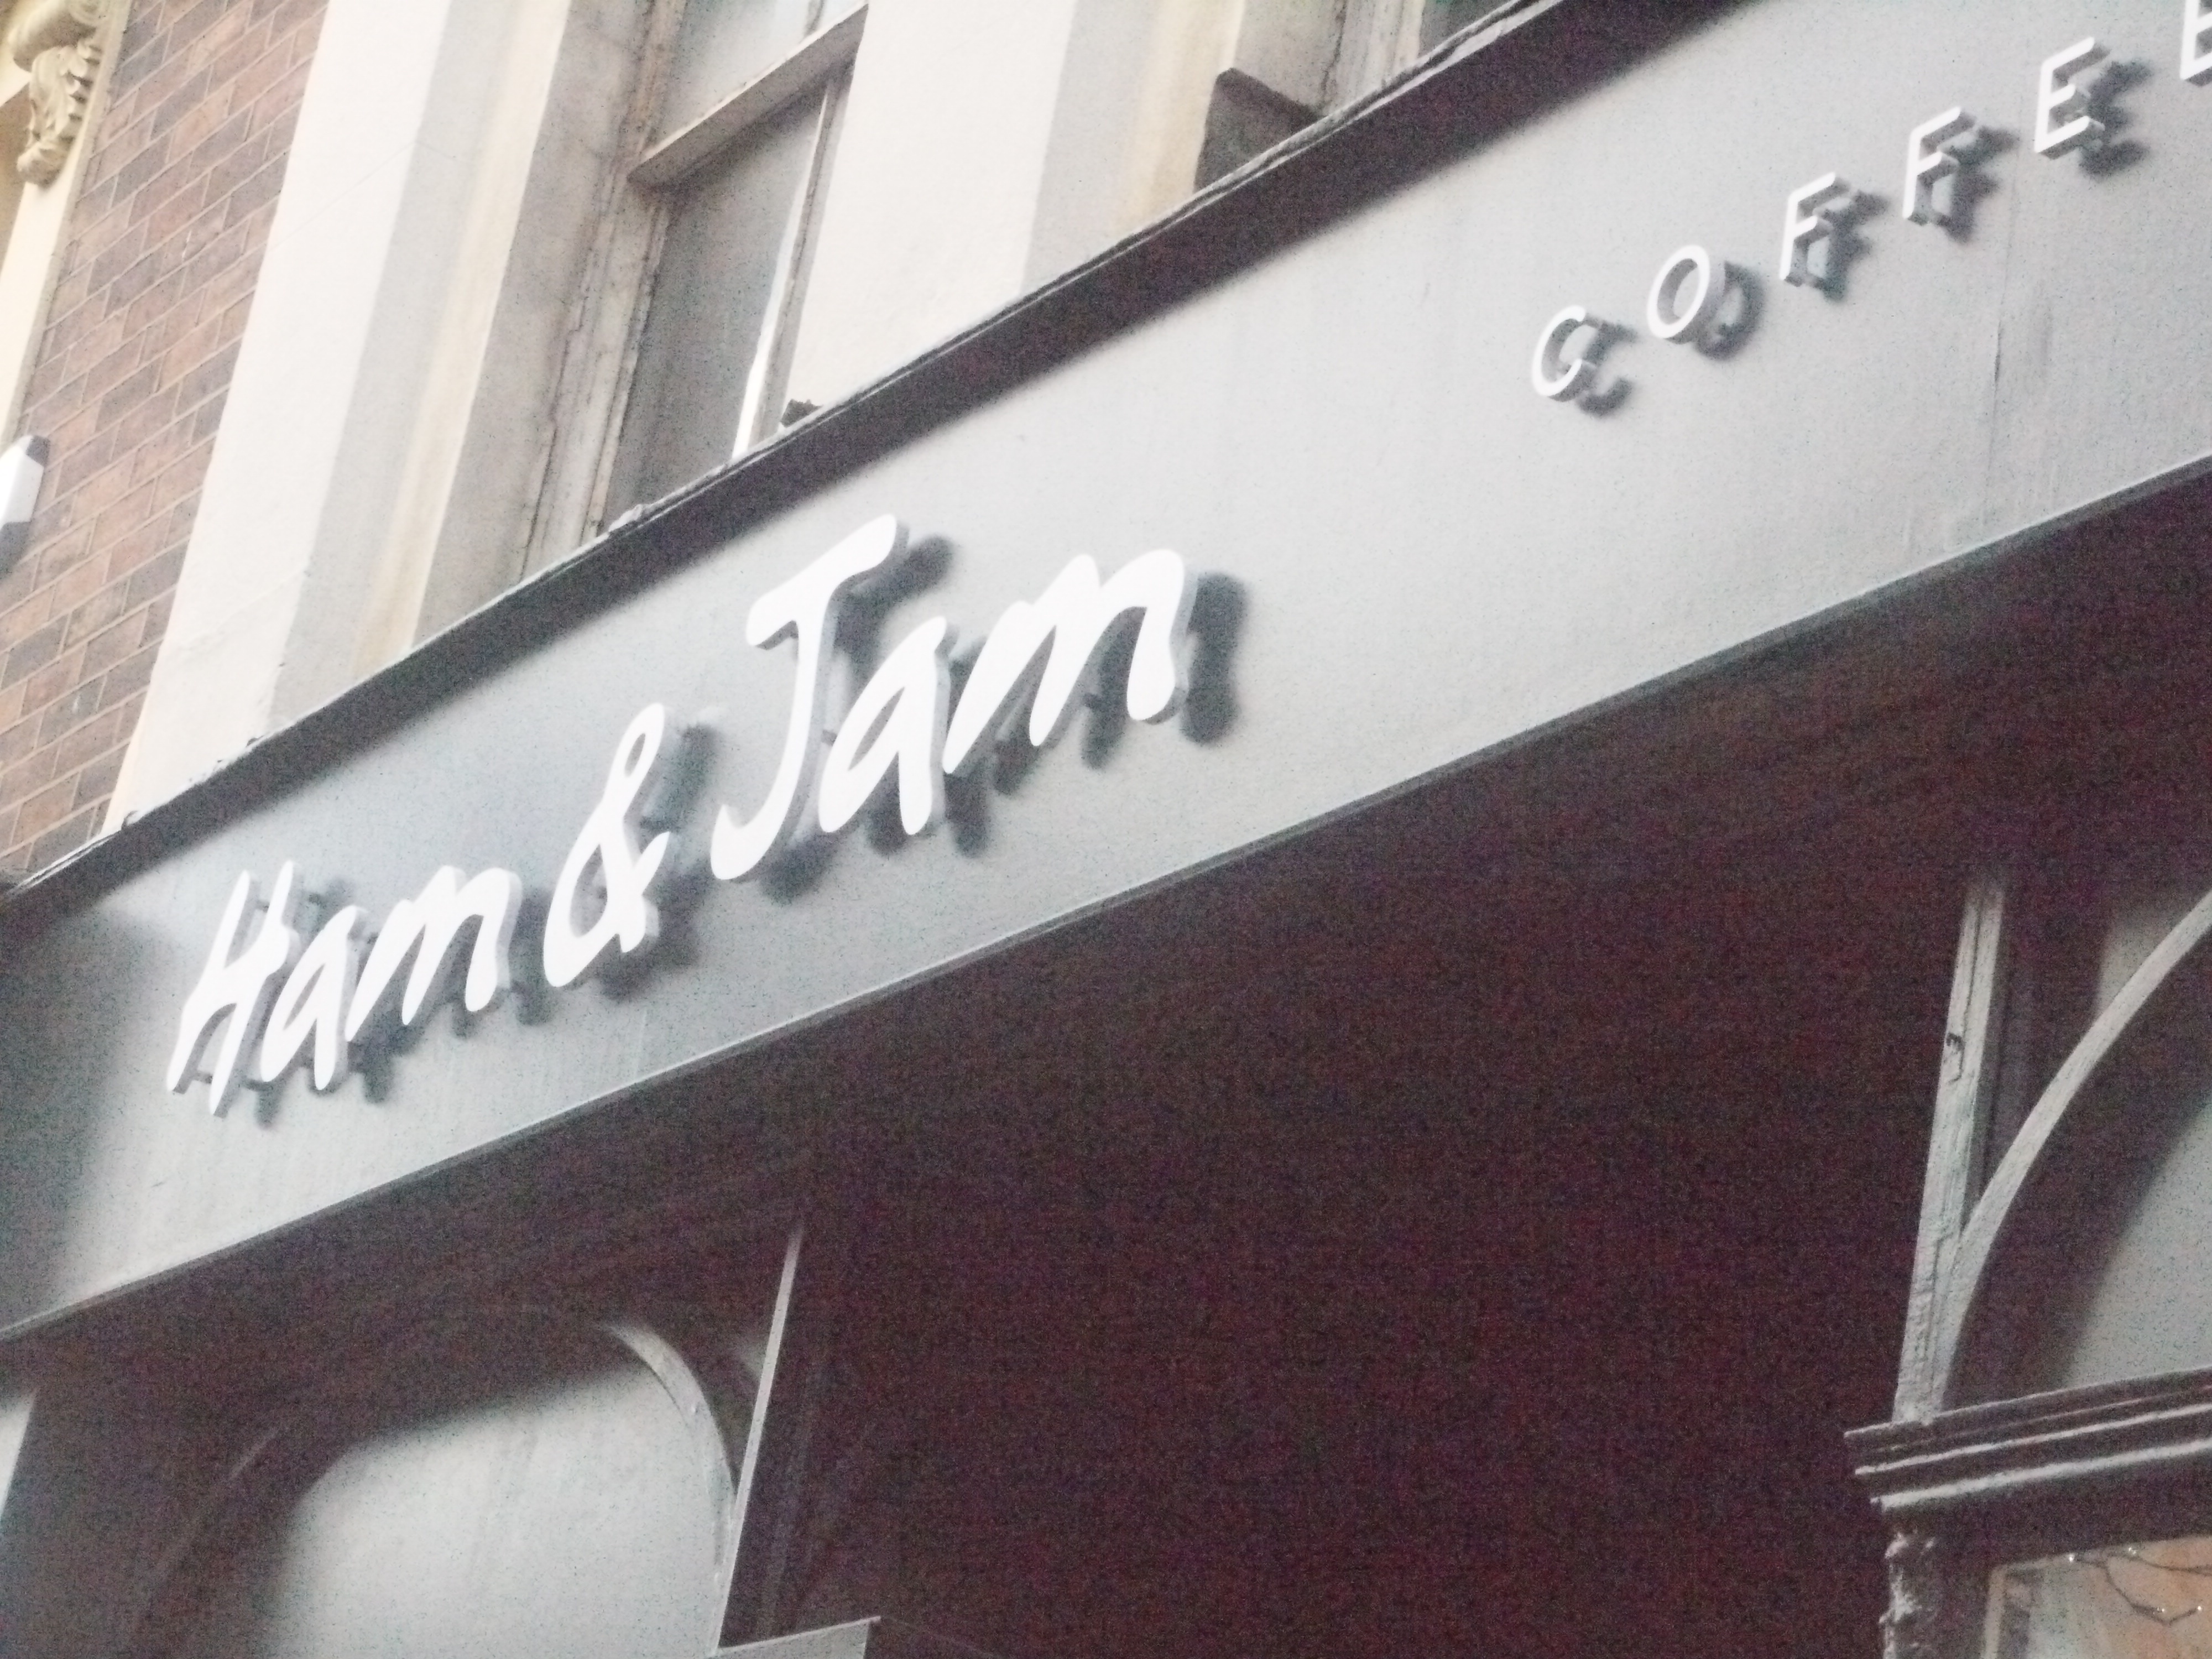 Photo taken by me – The Ham And Jam Café, Preston 